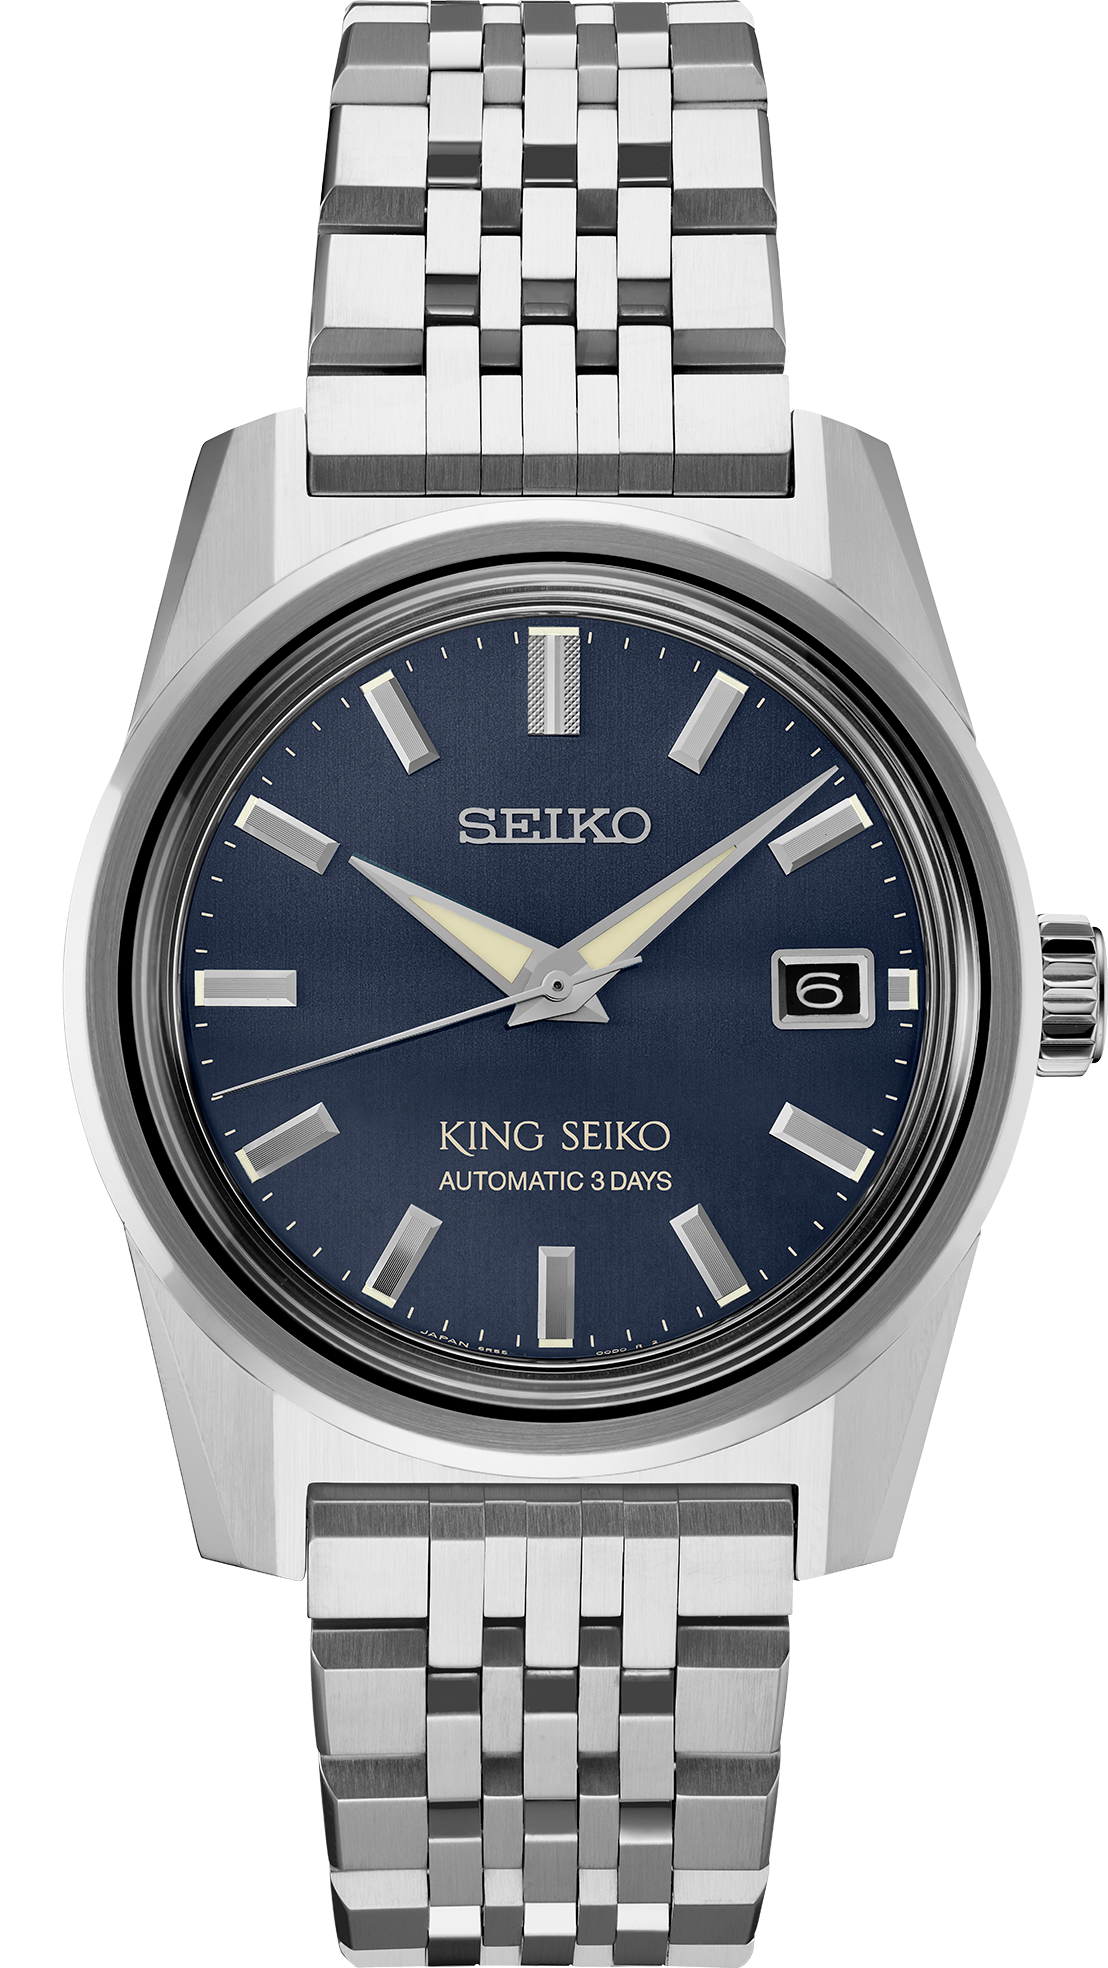 SPB389 Blue dial stainless steel King Seiko front solder shot